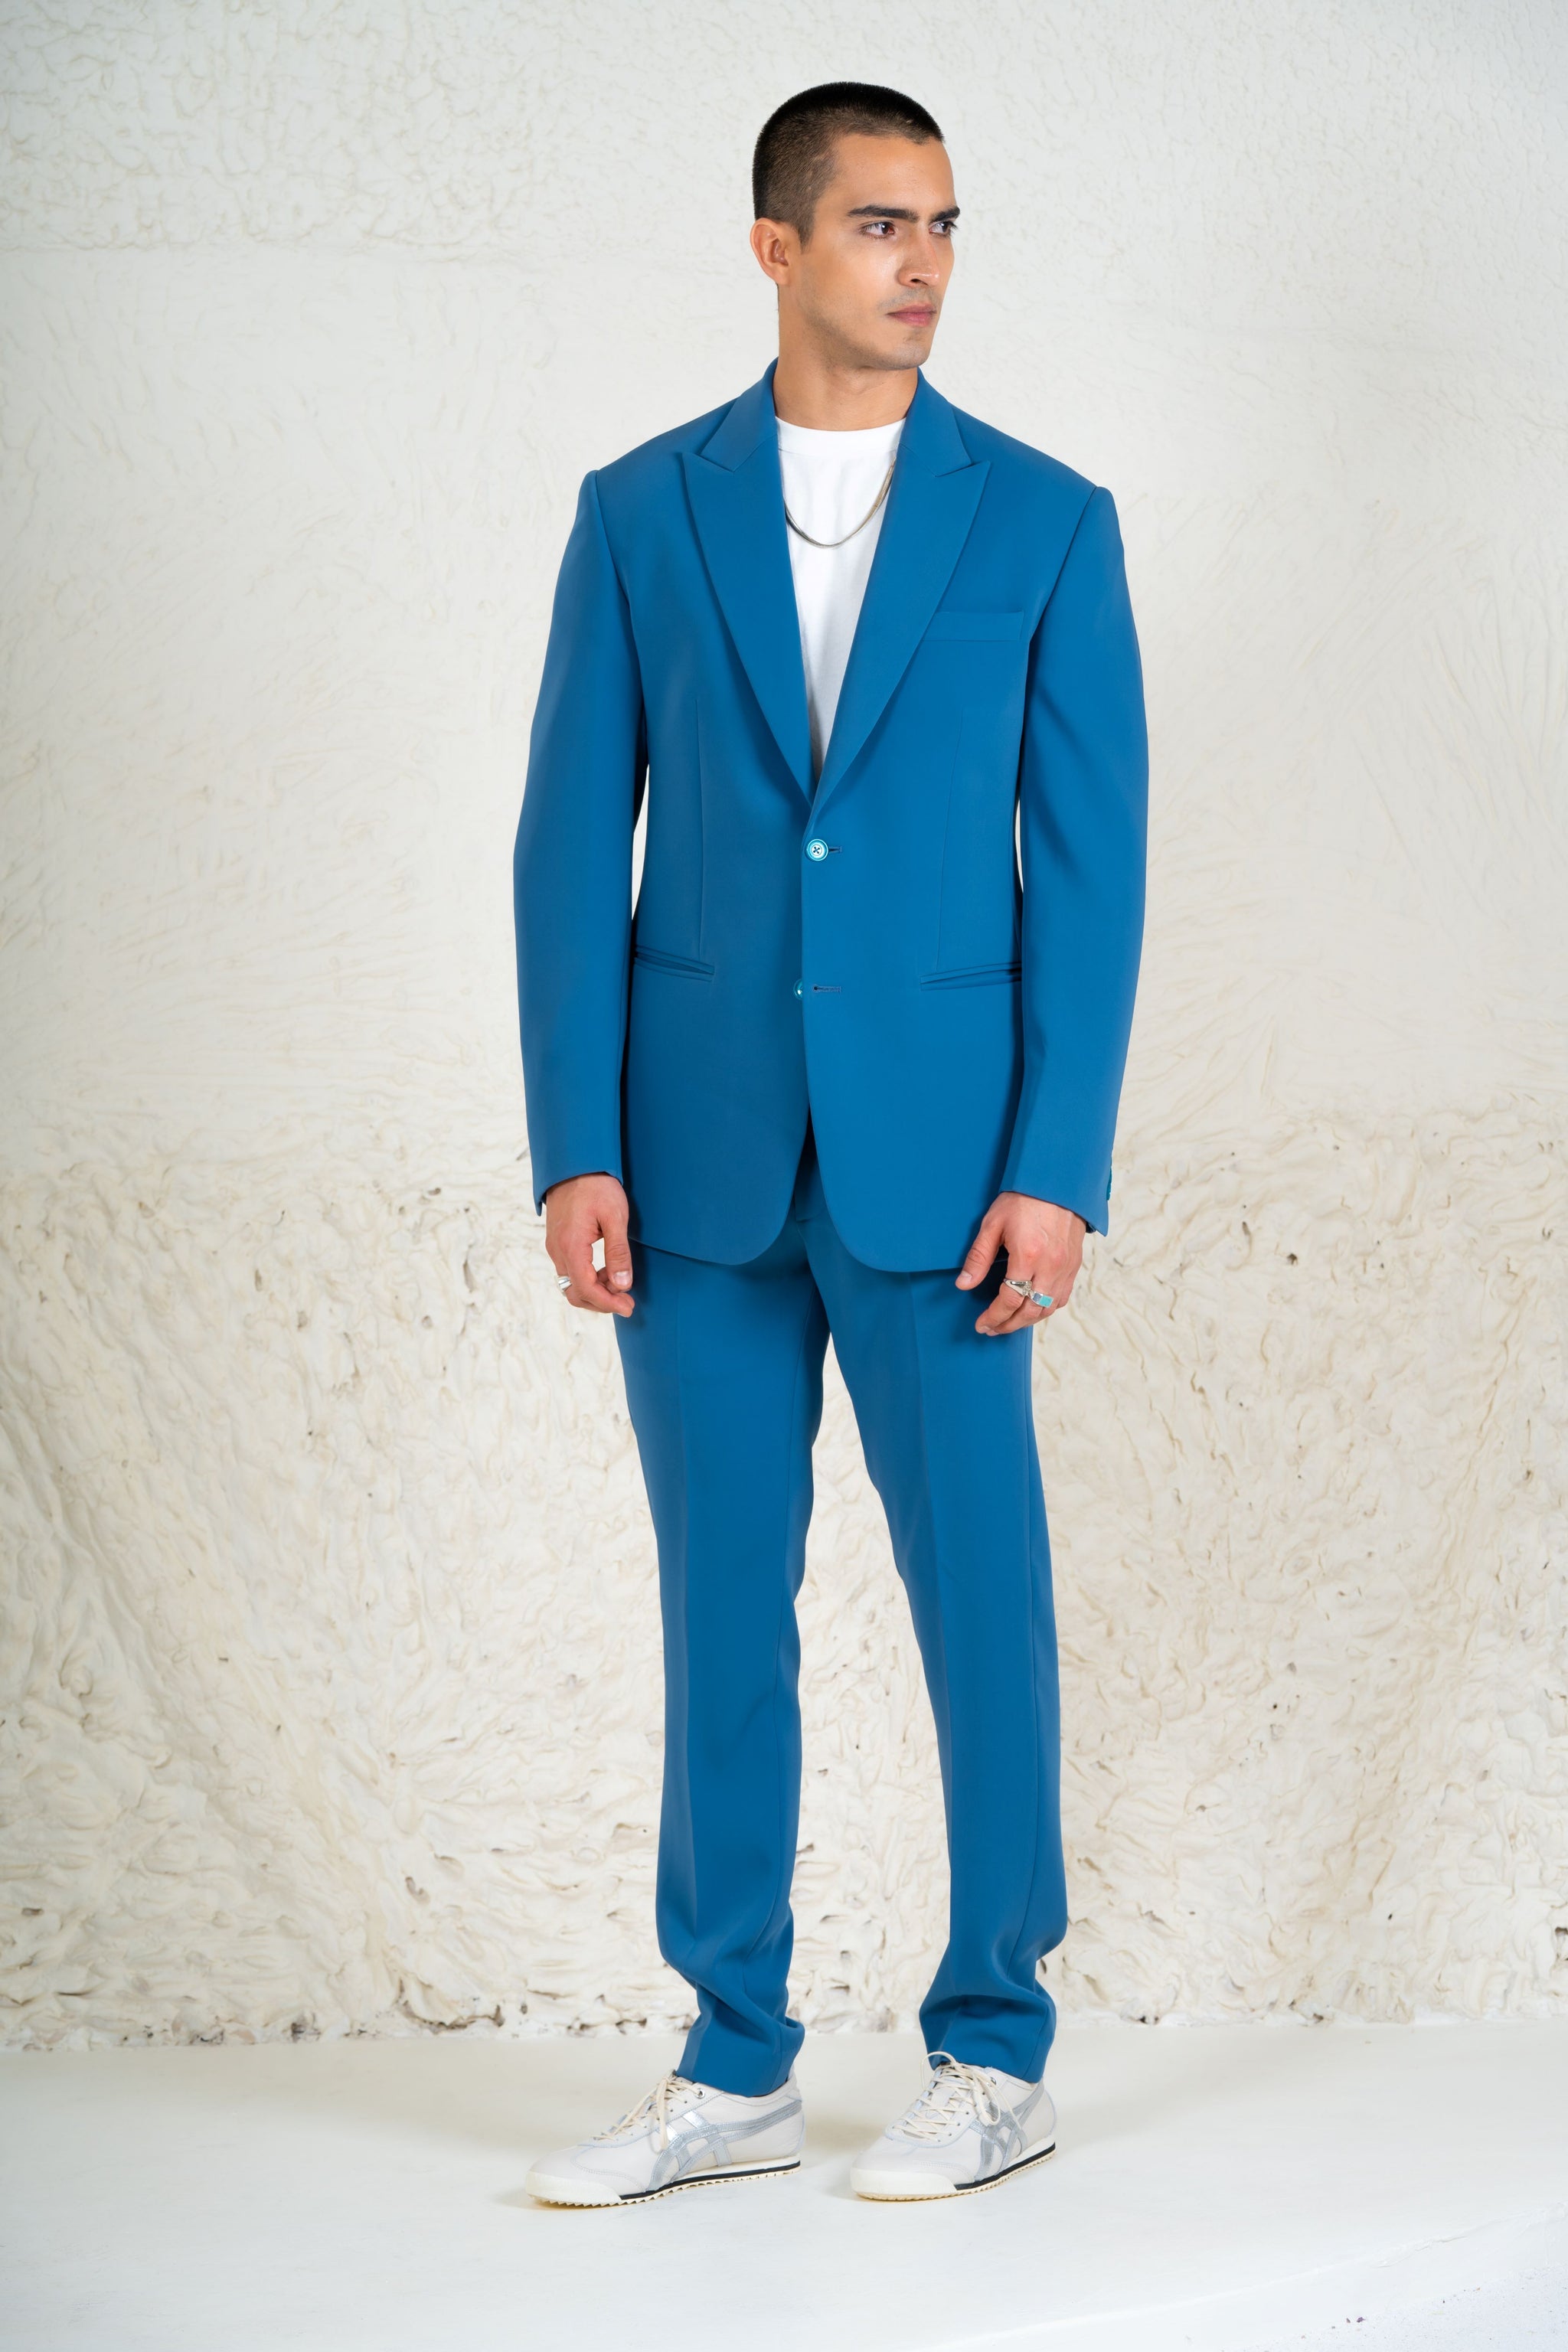 Summer Teal blue suit